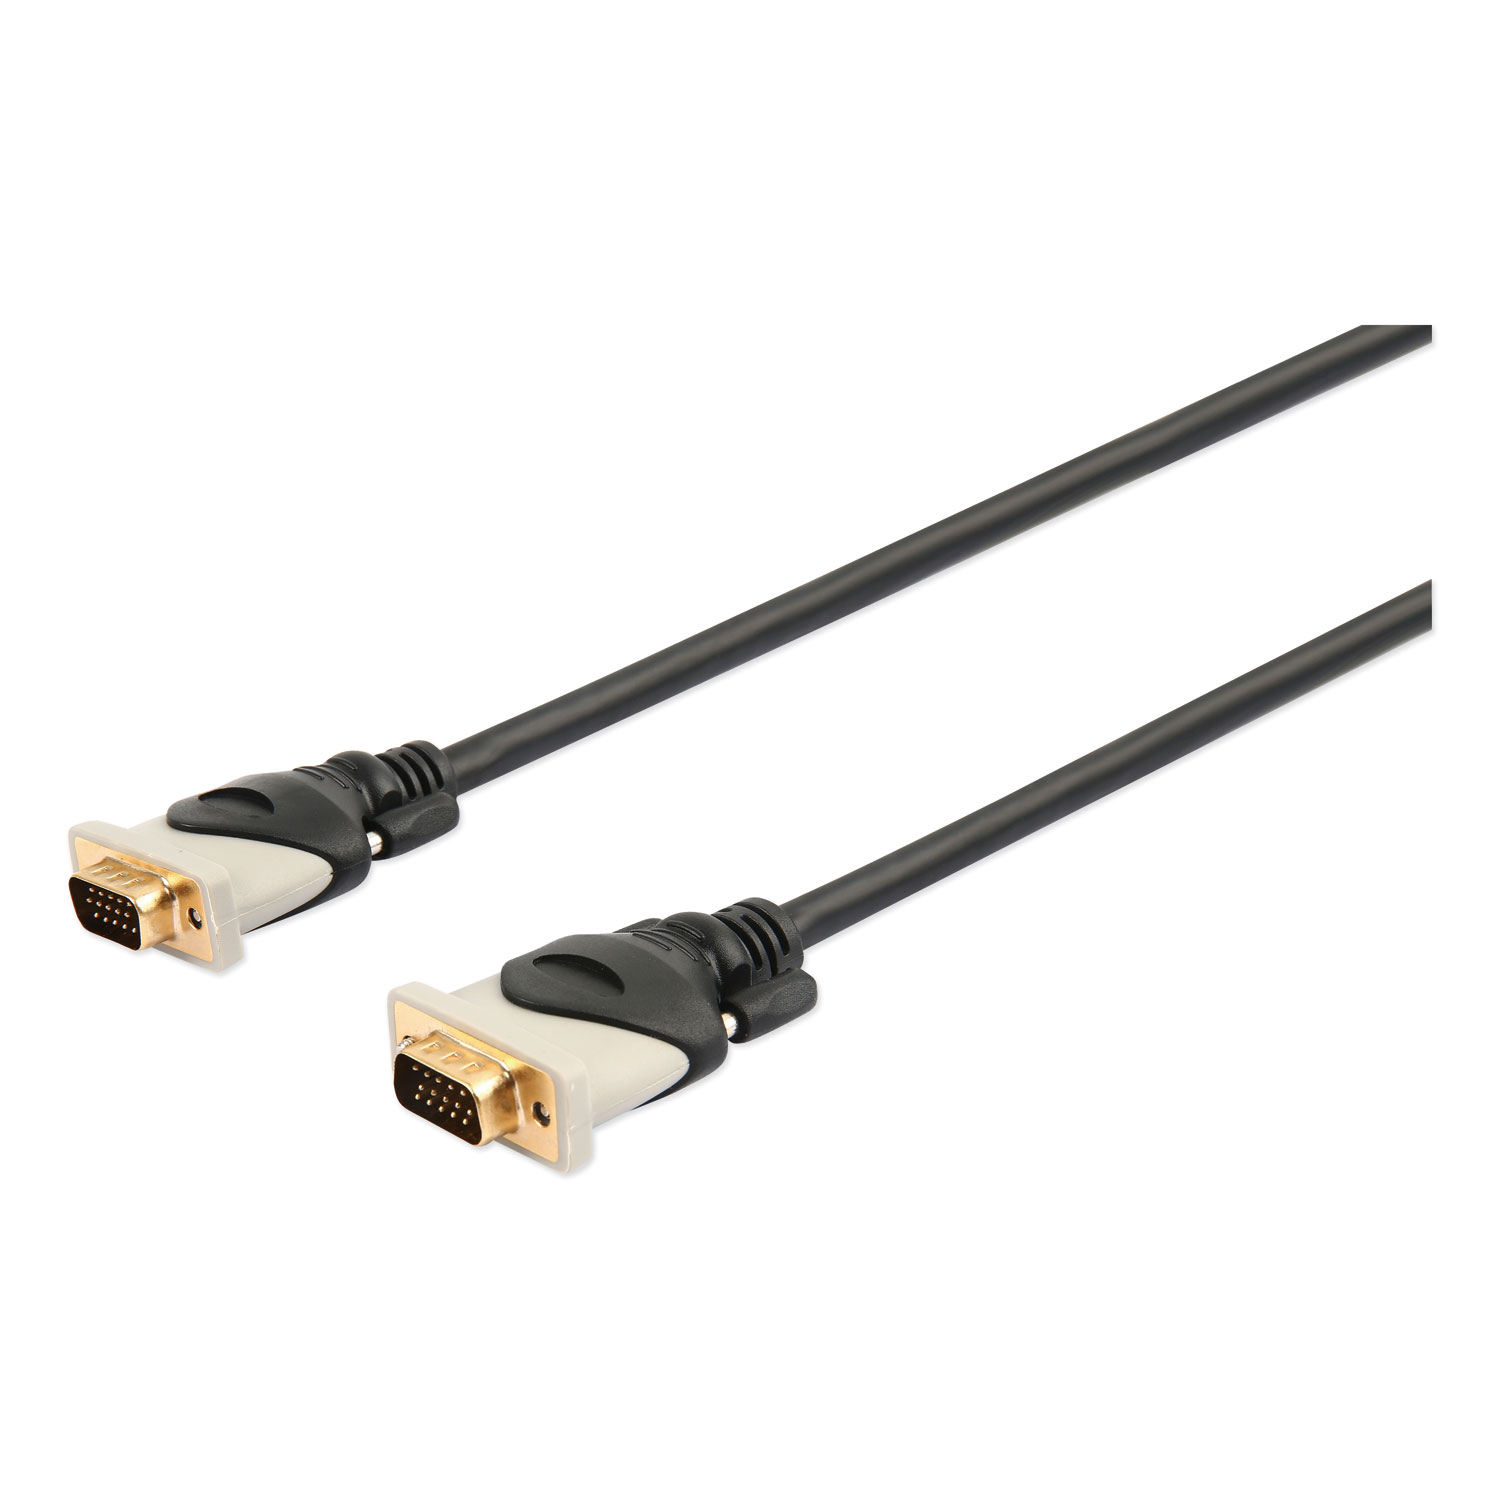  Innovera IVR30036 SVGA Cable, 25 ft, Black (IVR30036) 